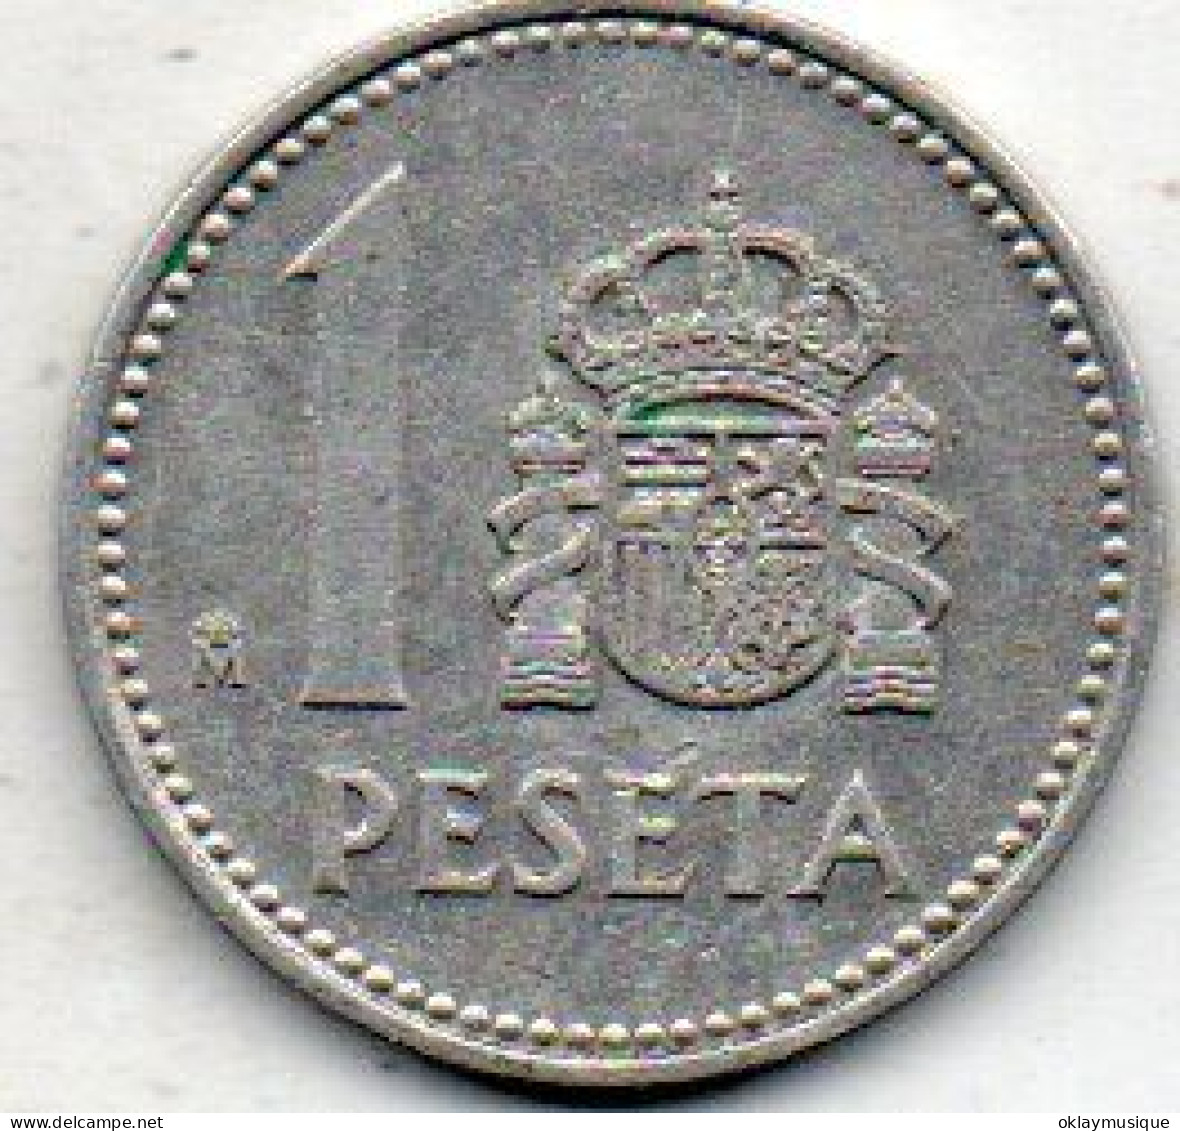 1 Pesetas 1984 - 1 Peseta